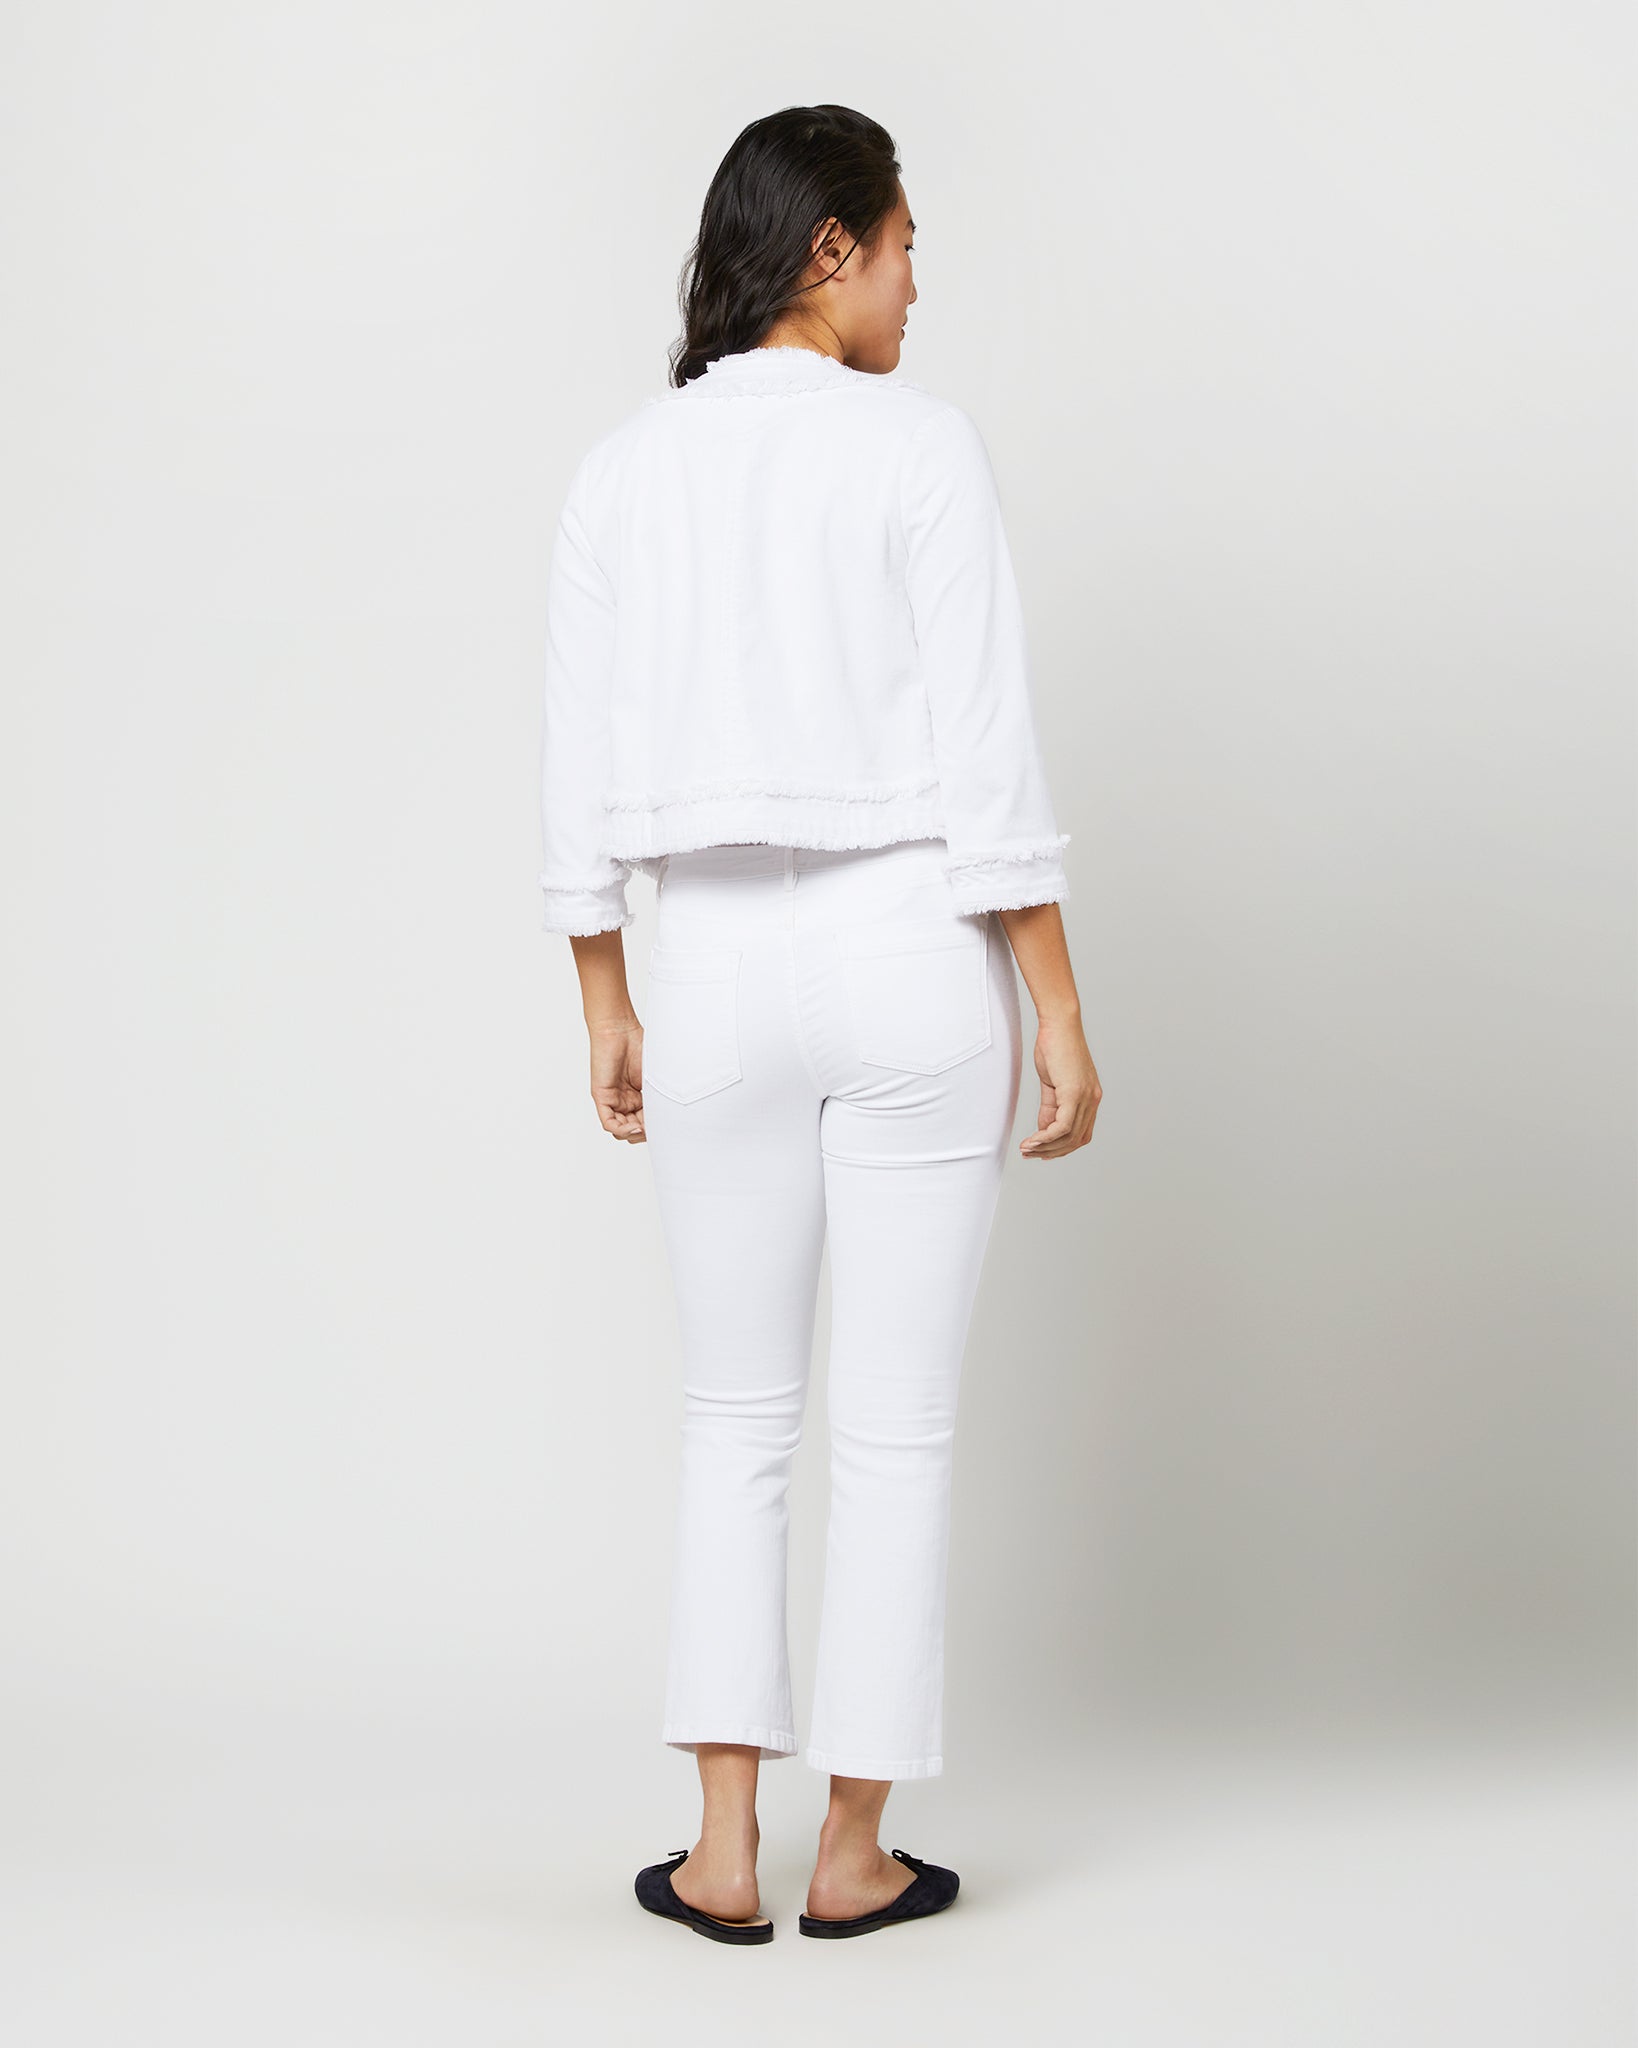 Kiki Jacket in White Garment-Dyed Stretch Twill